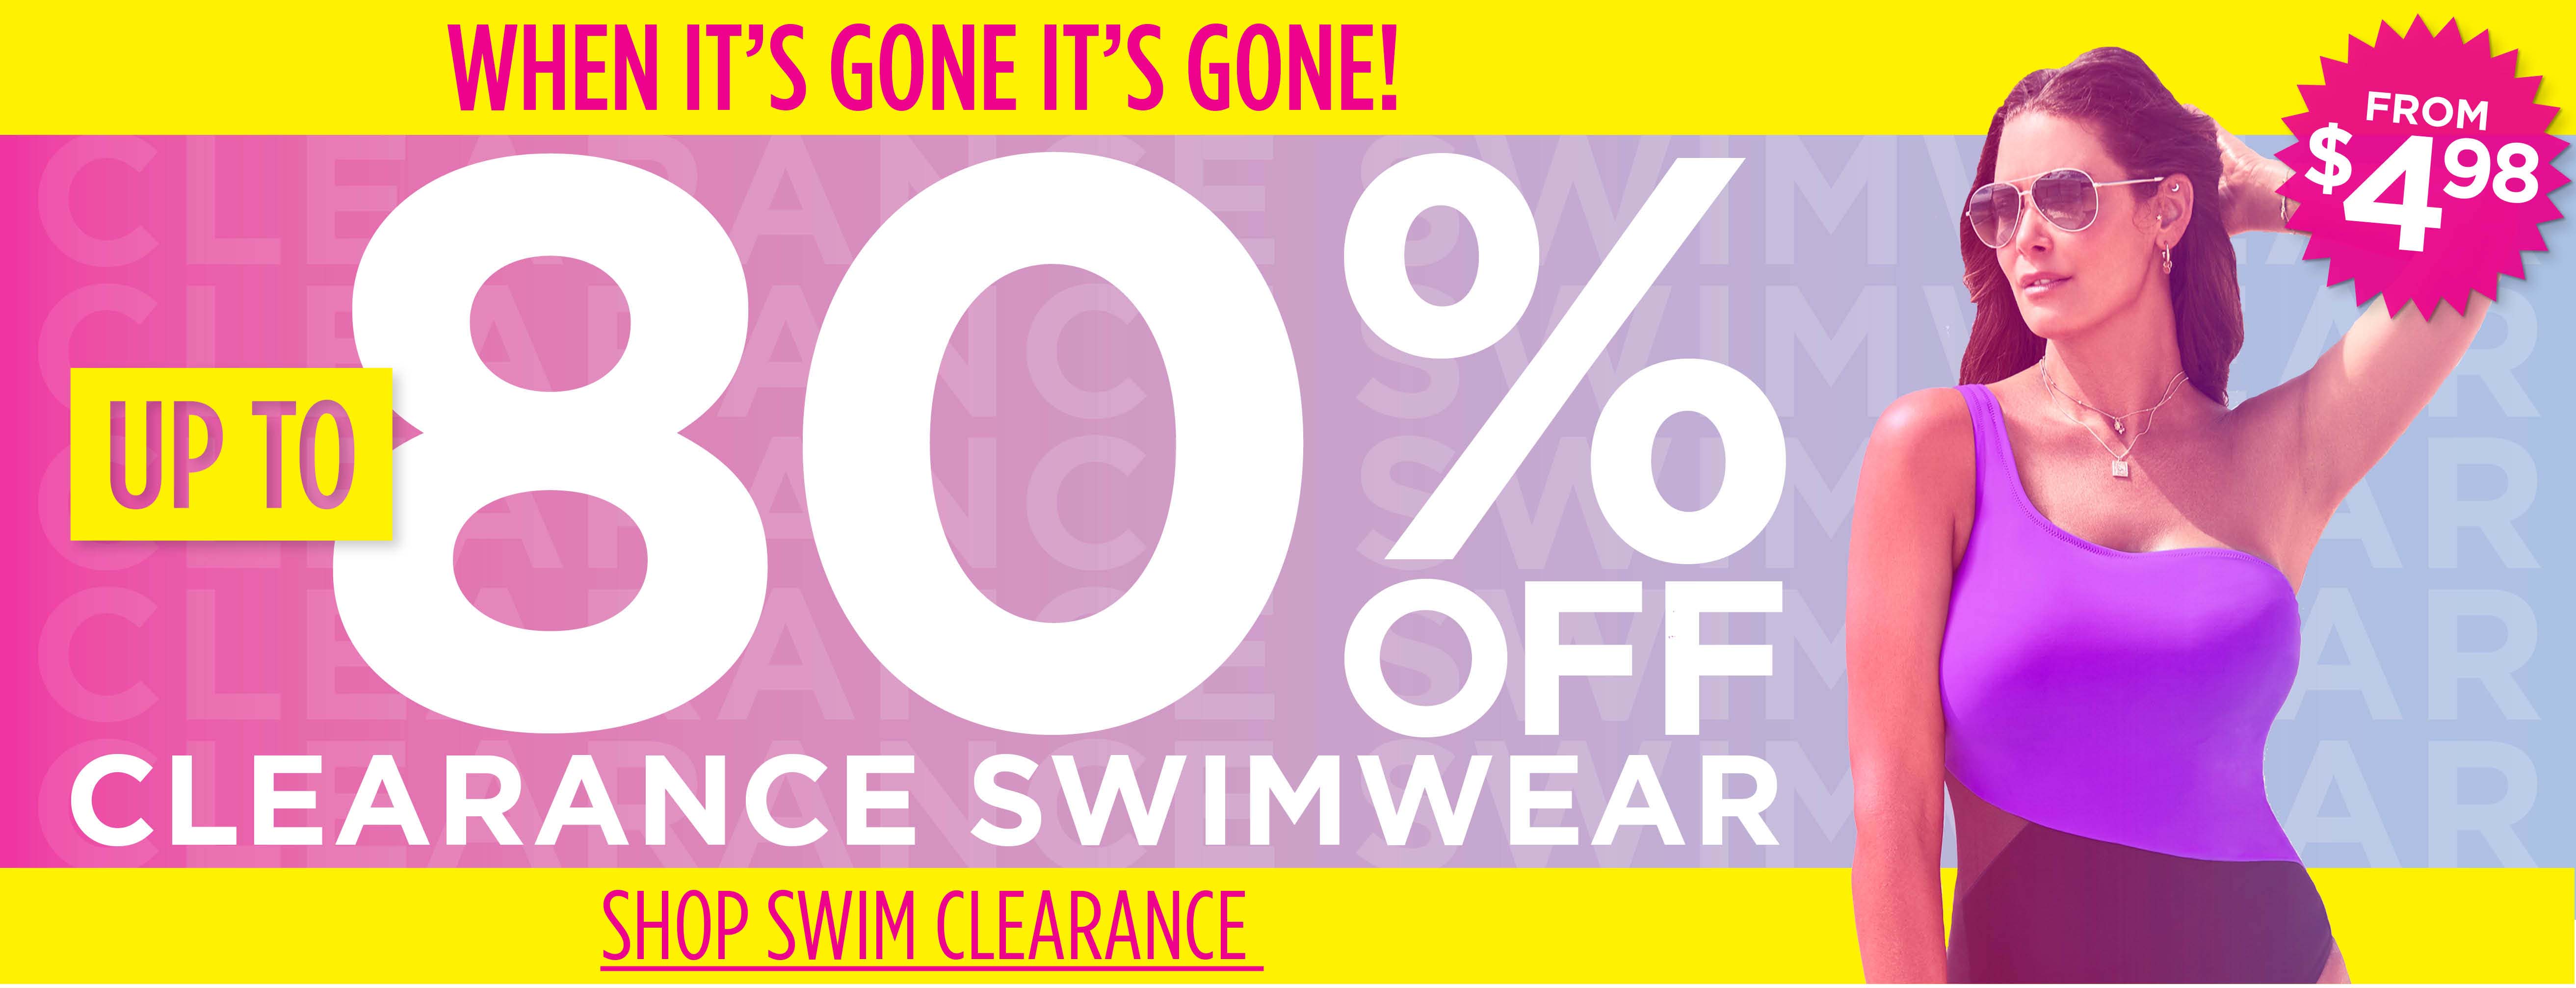 When it's gone it's gone! up to 80% off clearance swimwear shop swim clearance